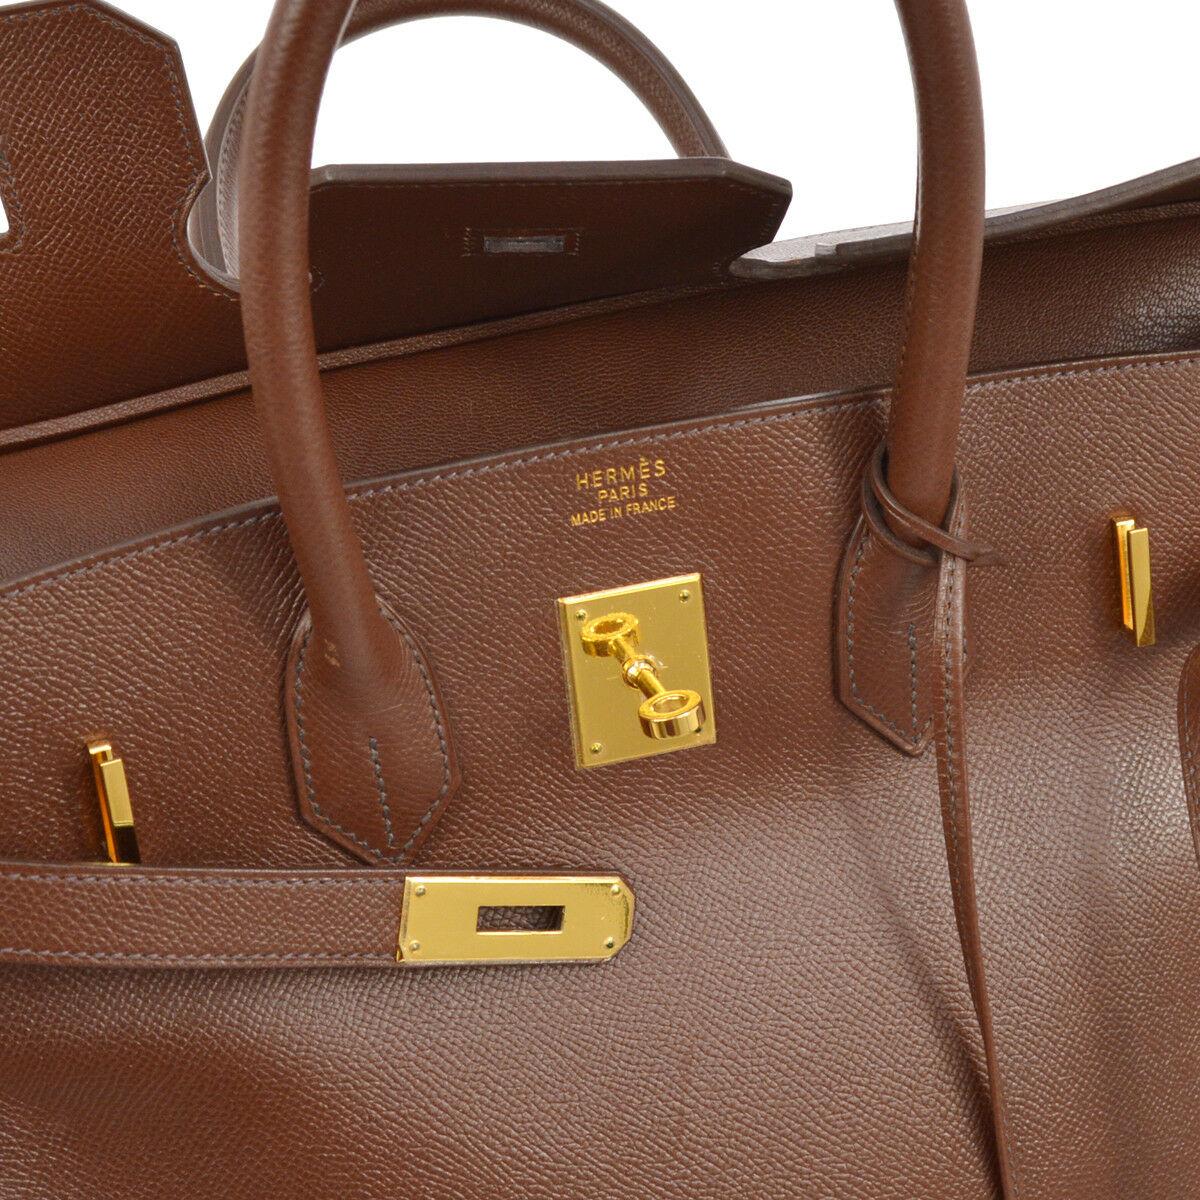 Hermes Birkin 35 Brown Leather Gold Top Carryall Handle Satchel Travel Tote Bag (Braun)